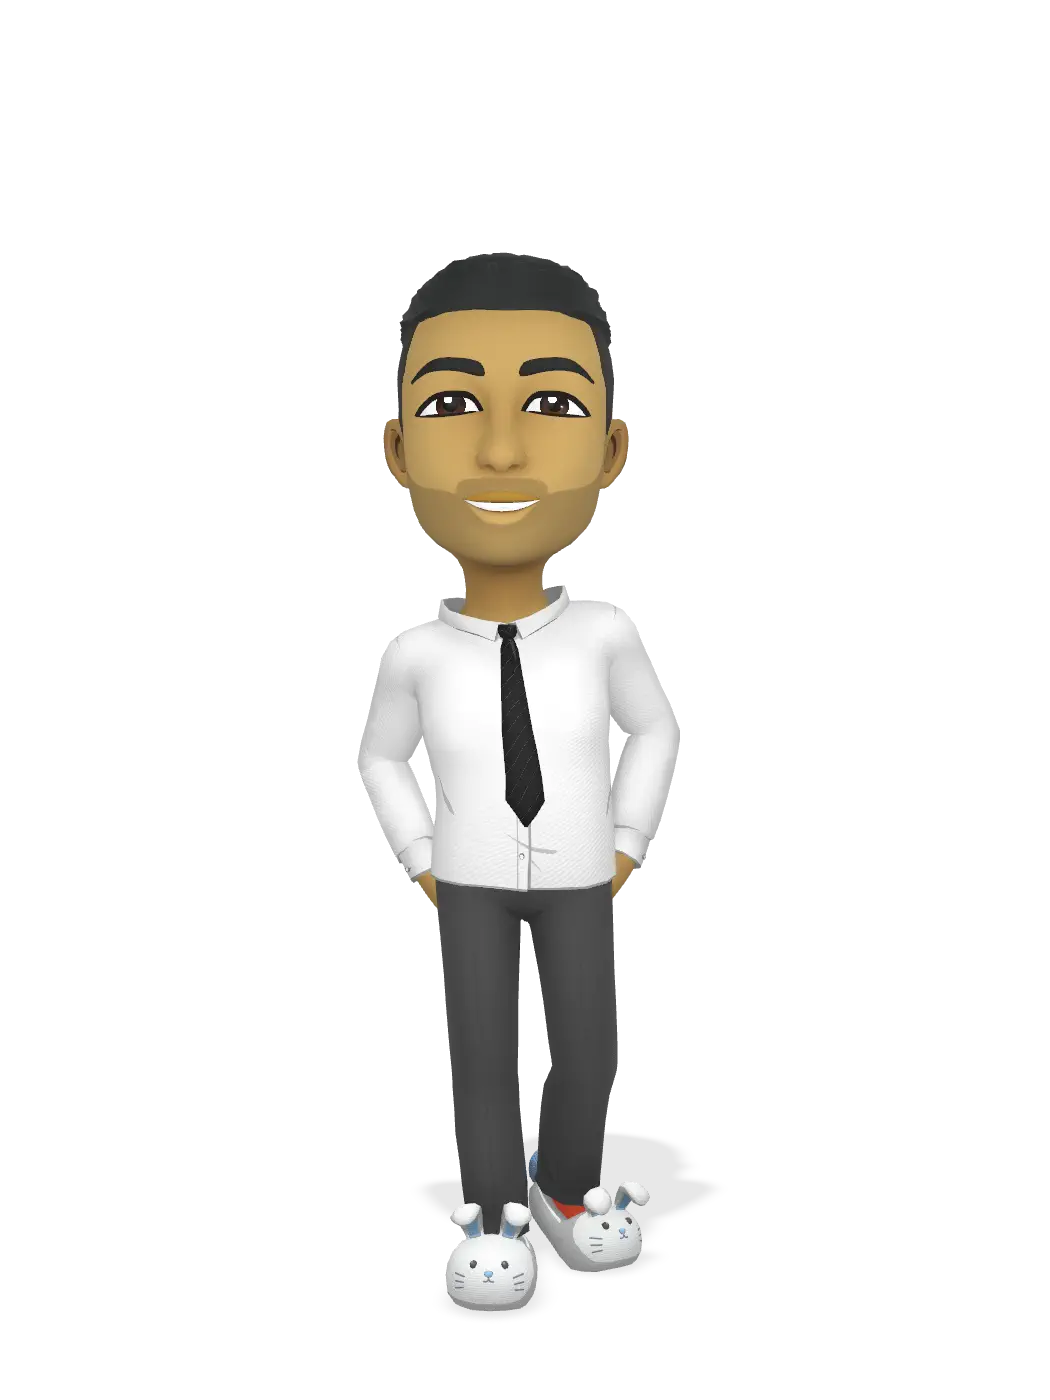 3D Bitmoji for naifos3000 avatar